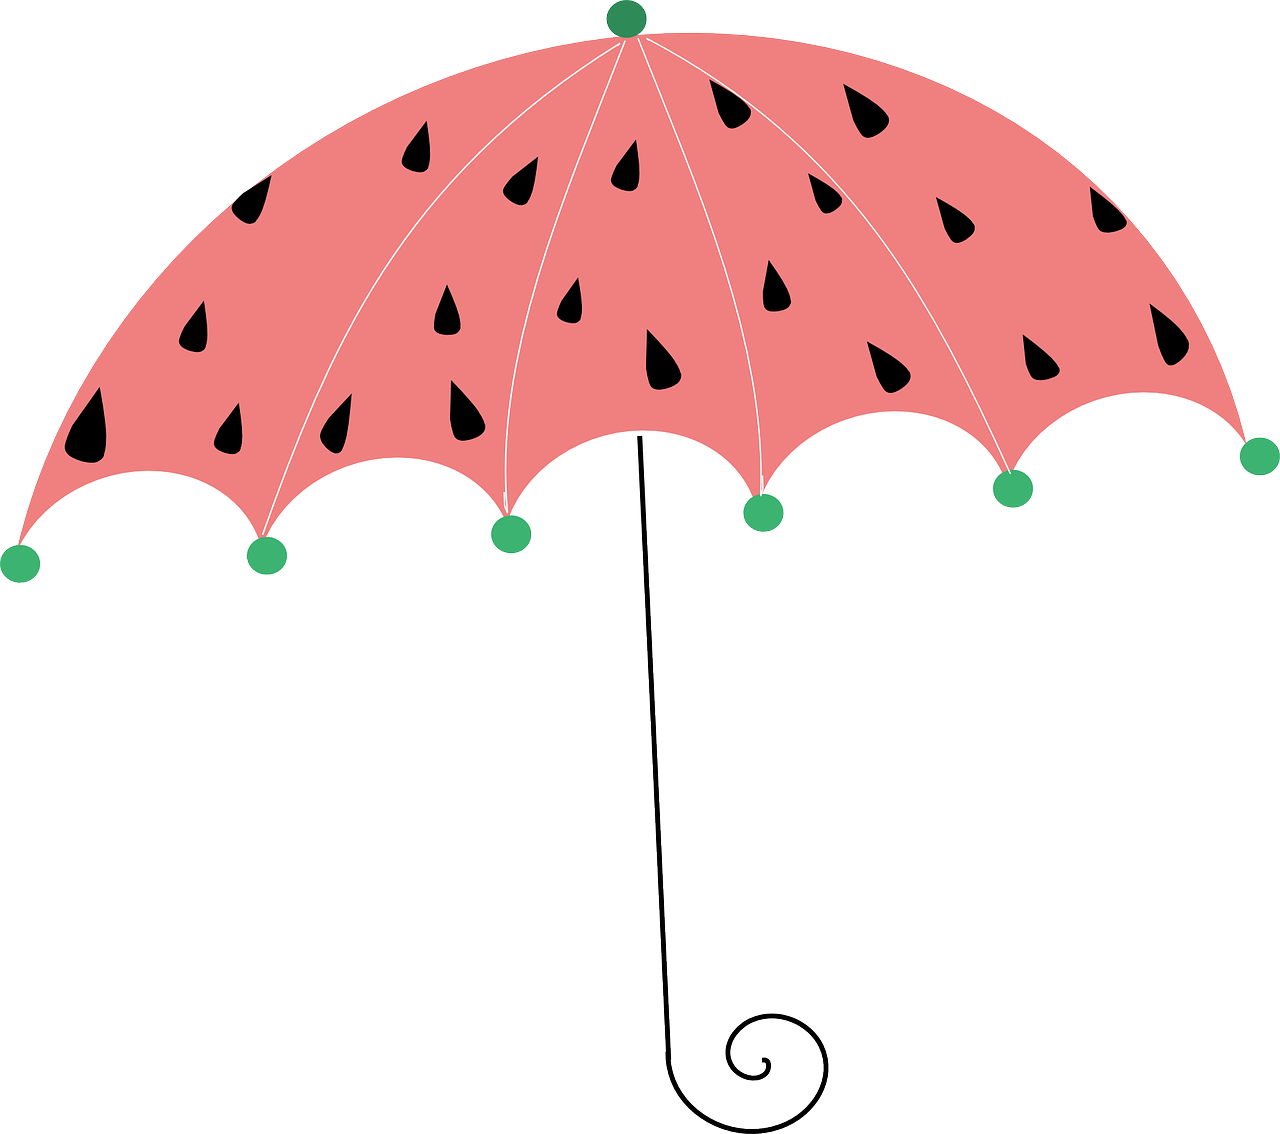 a watermelon umbrella with rain drops on it, inspired by Masamitsu Ōta, clip art, peach embellishment, unwind!, red and black color scheme